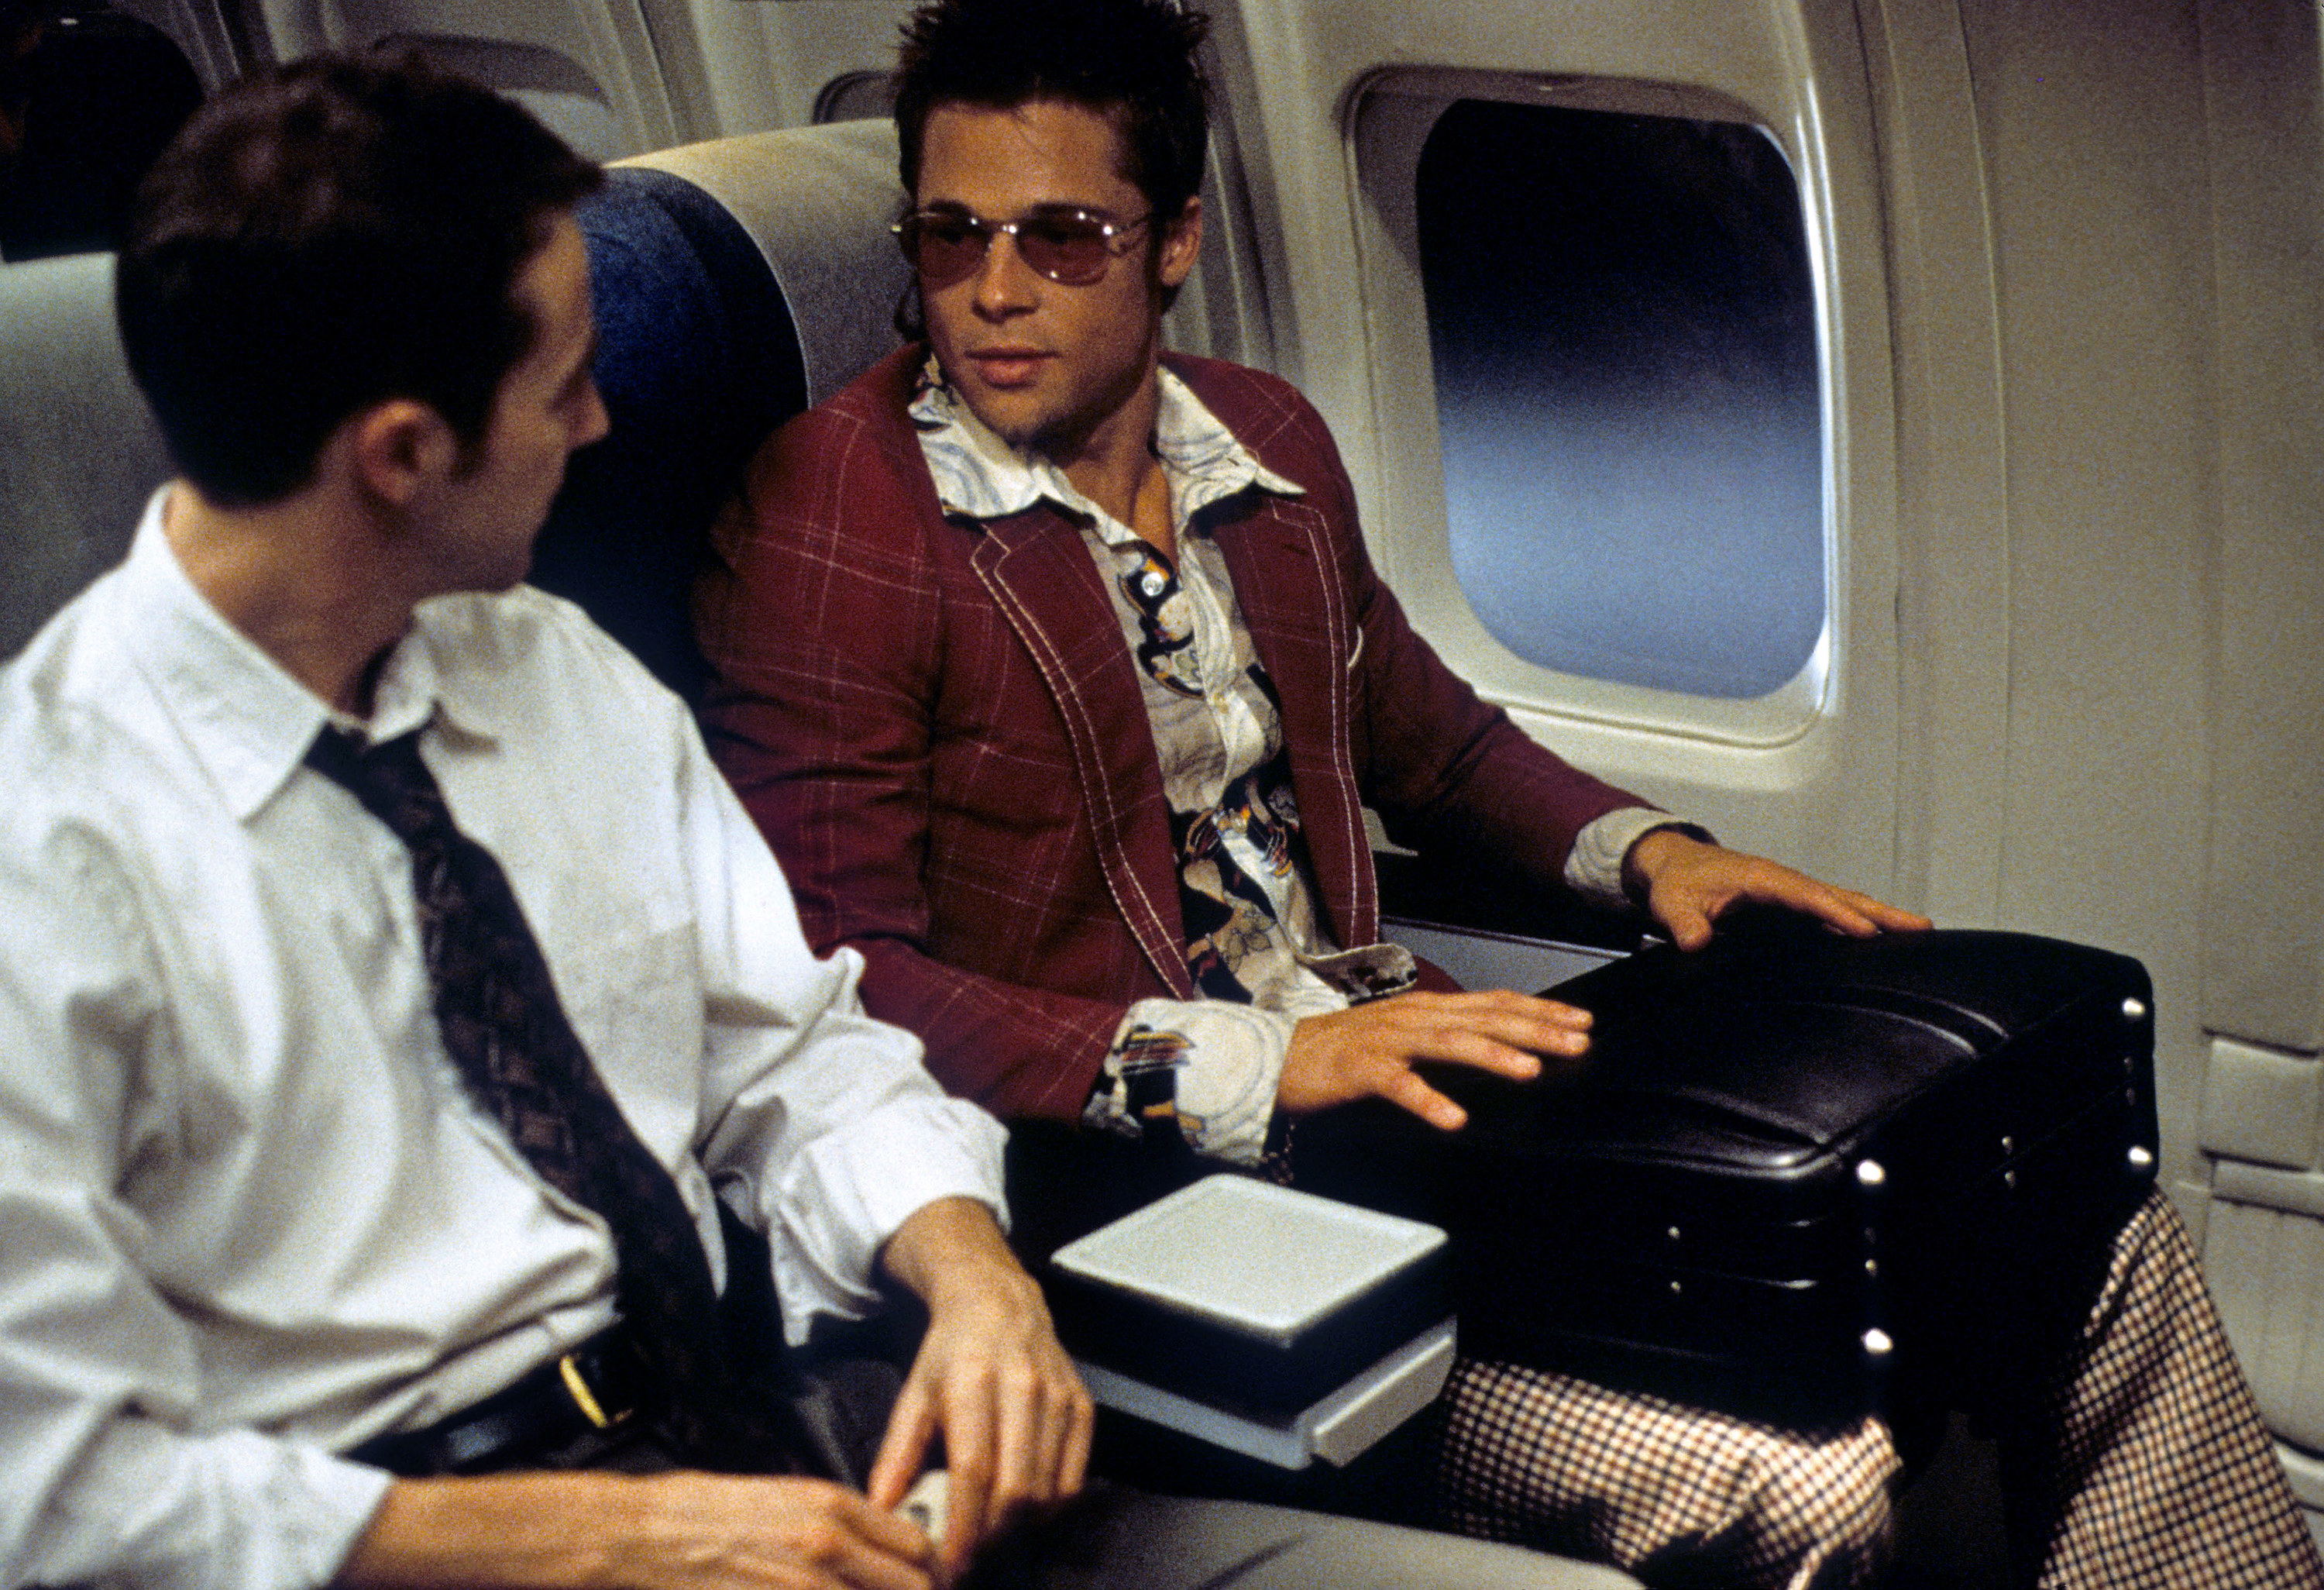 Edward Norton and Brad Pitt sitting on a plane.